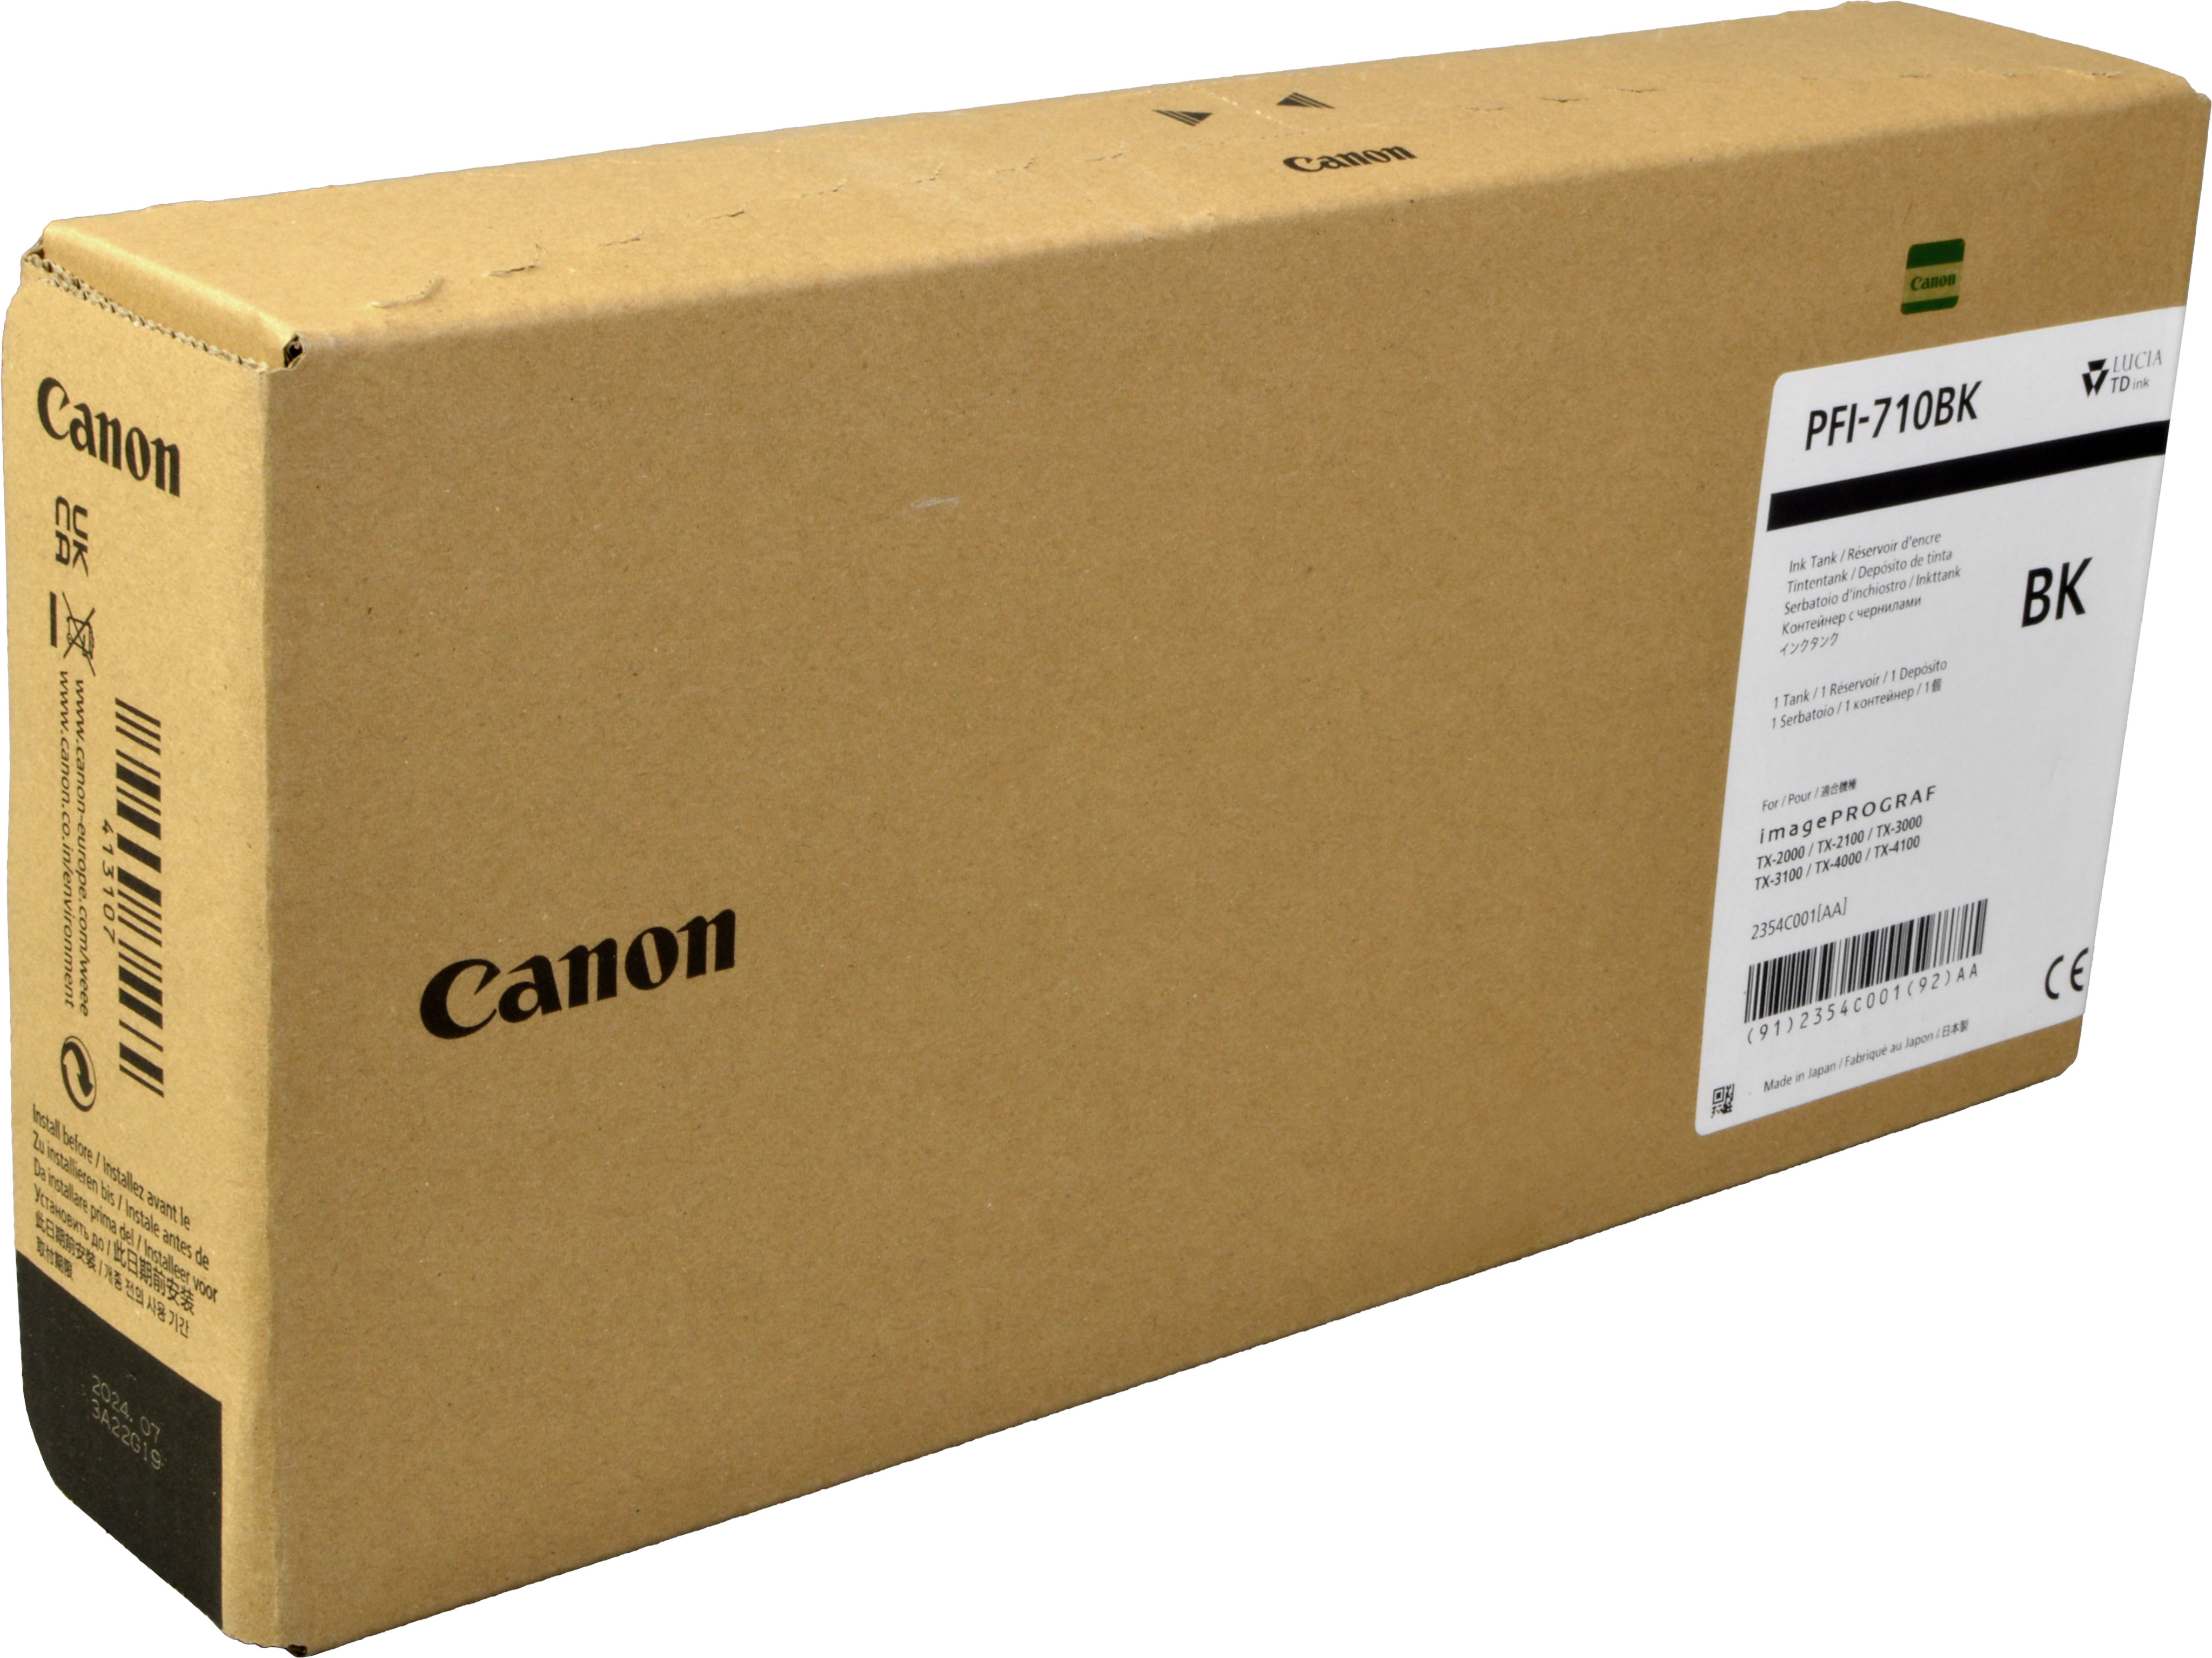 Canon Tinte 2354C001  PFI-710BK  schwarz